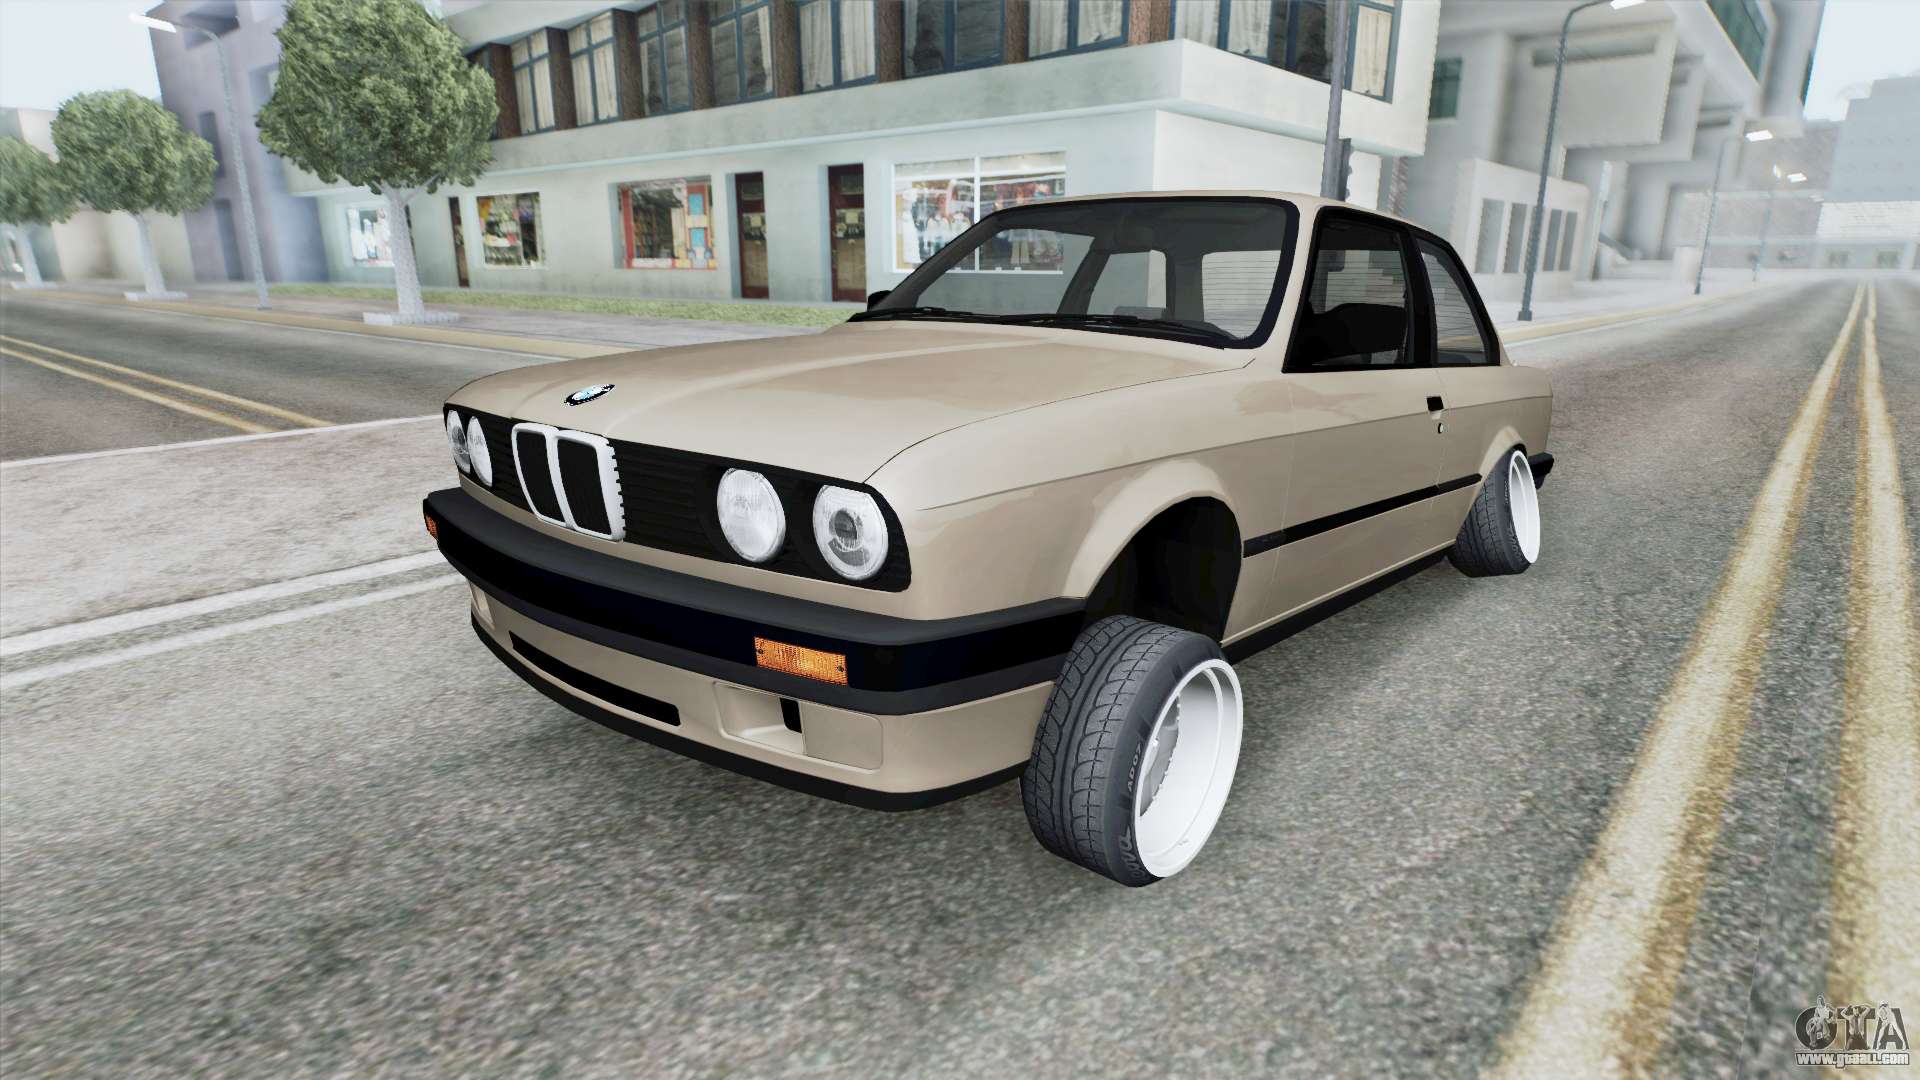 BMW 316 (E30) road test - Classics World